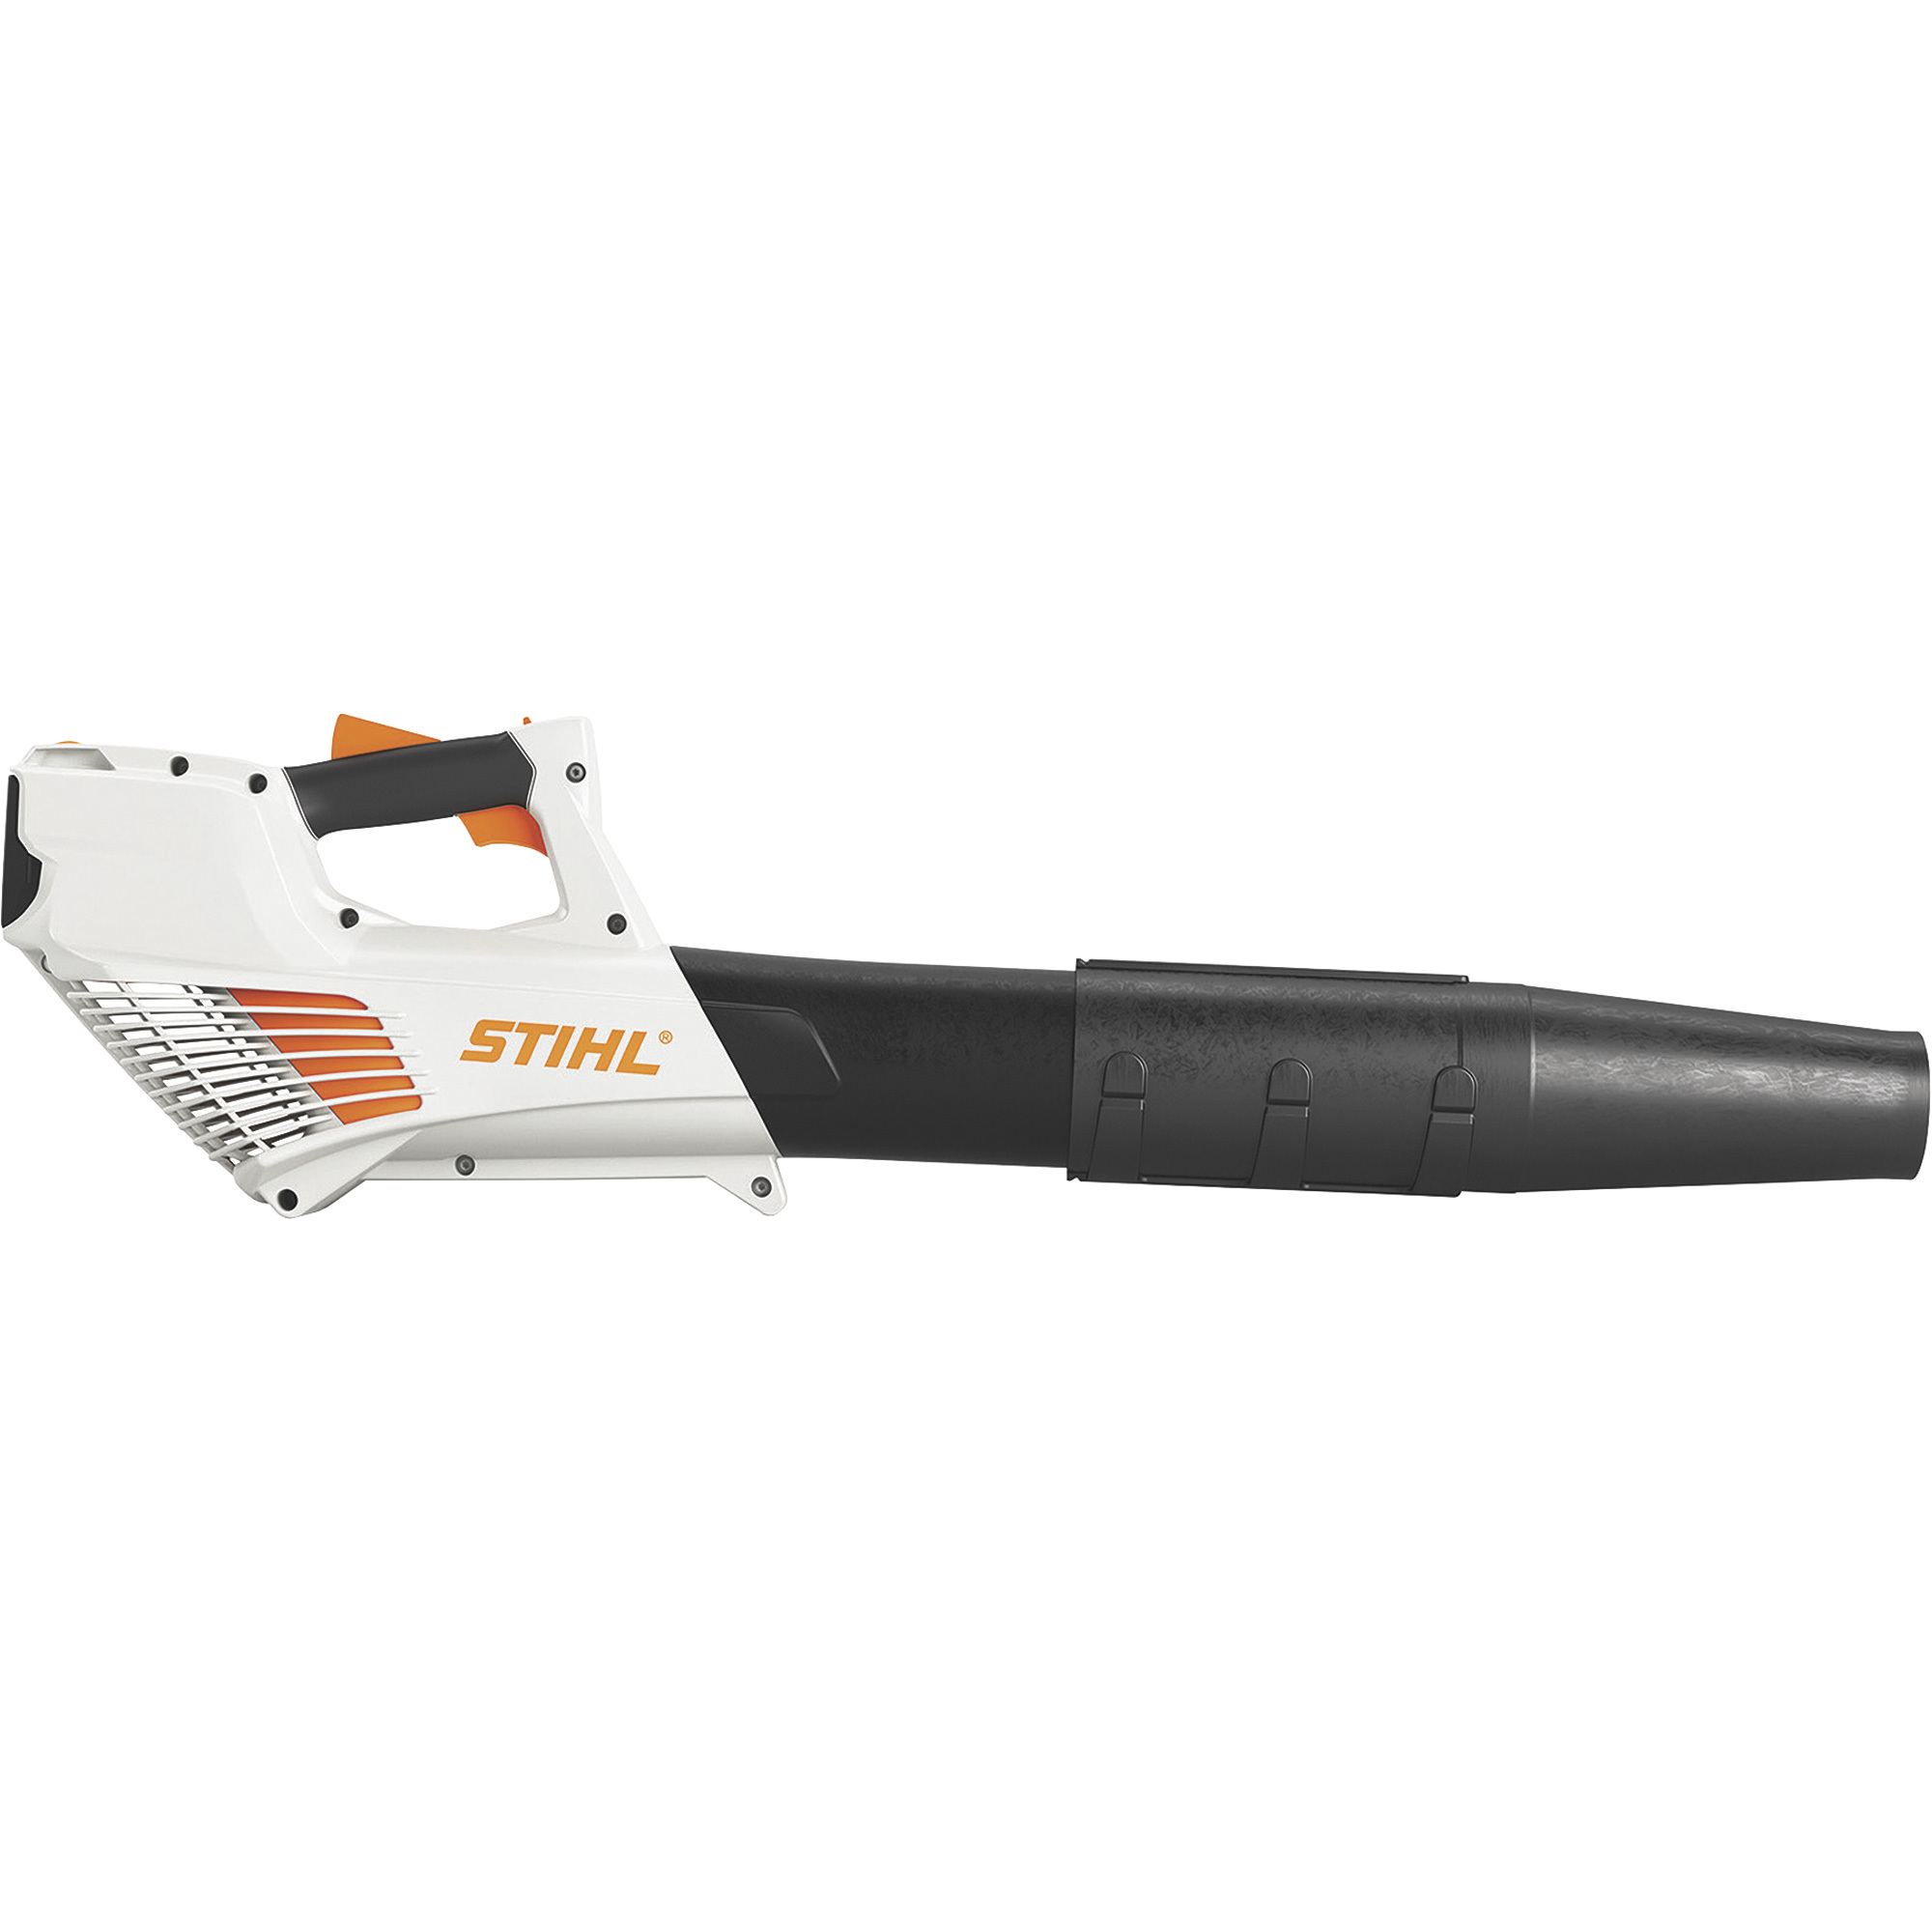 STIHL Lithium-Ion Cordless Handheld Blower Kit â 100 MPH, 353 CFM, Model BGA 56 KIT